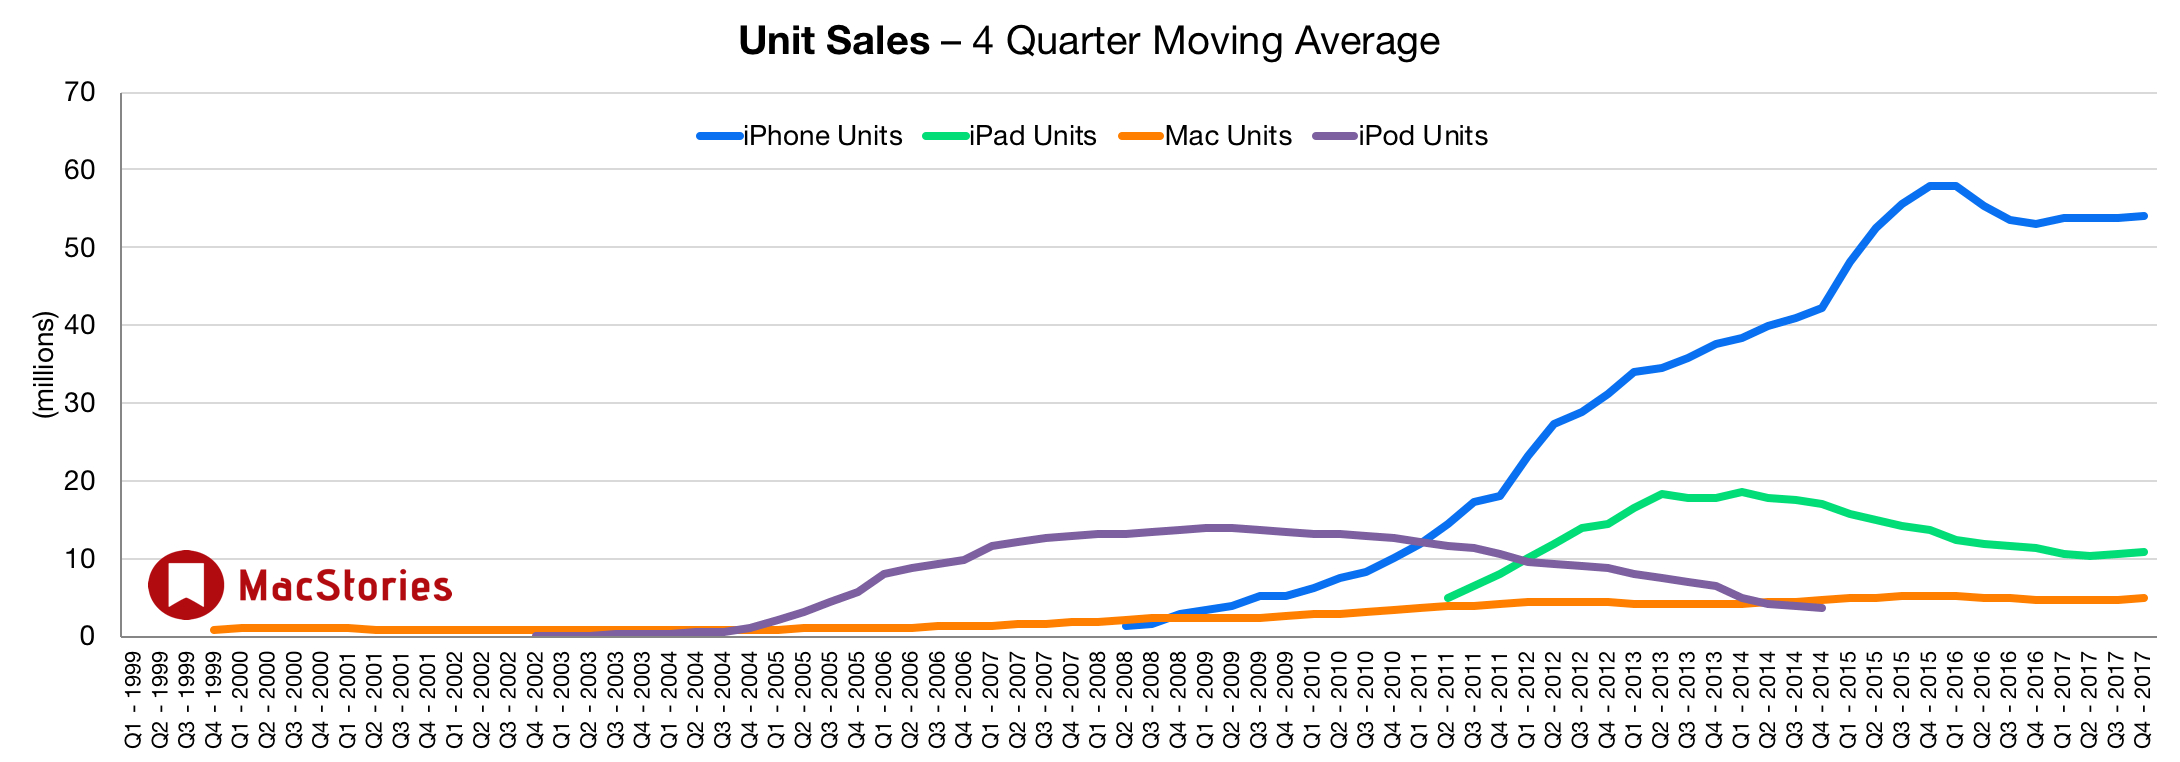 MacStories unit sales graph